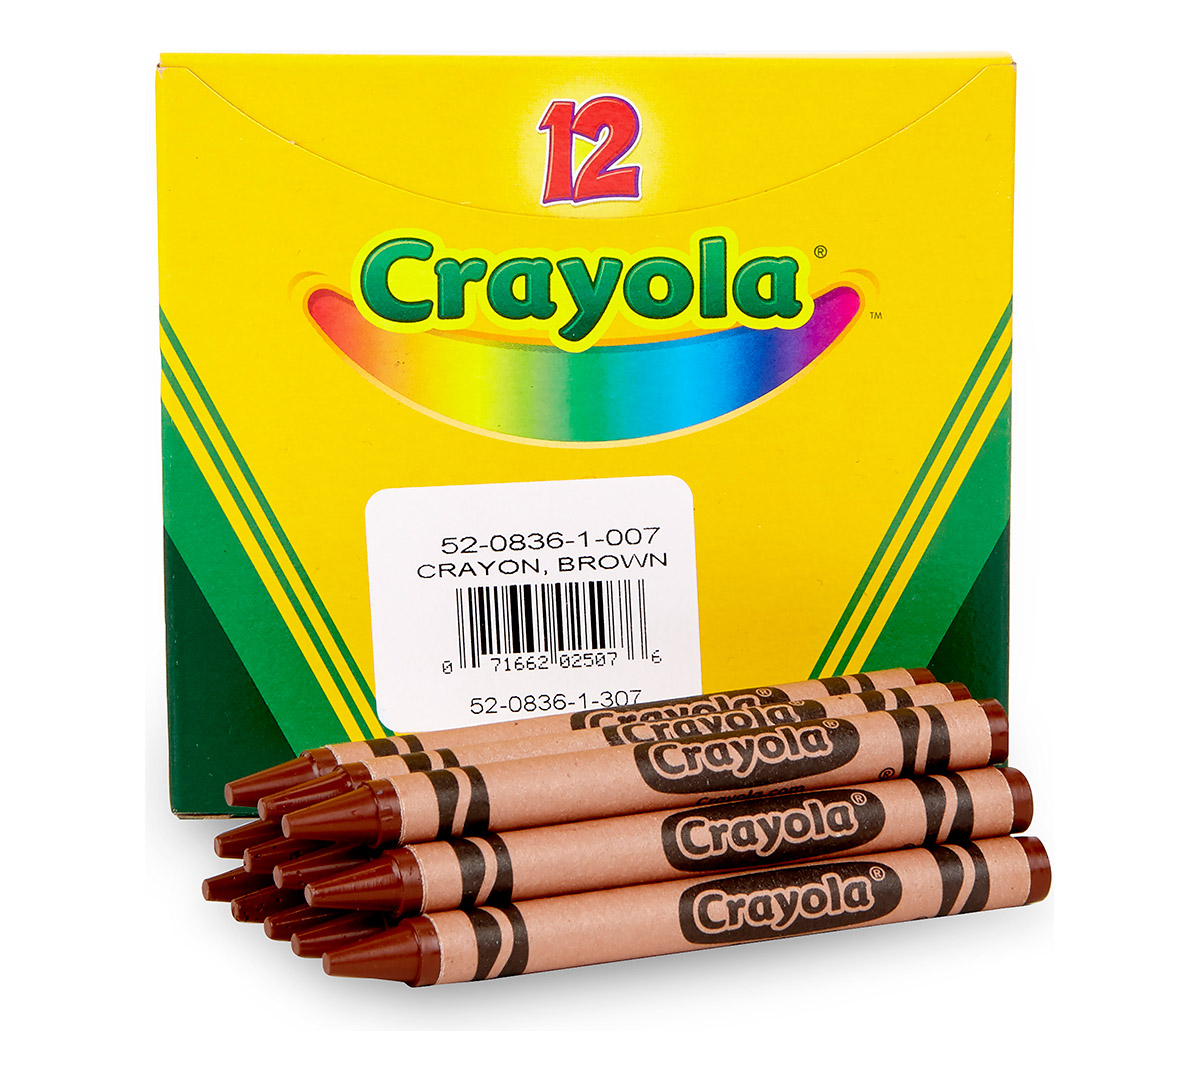 Crayola Crayon Large Refill, Red